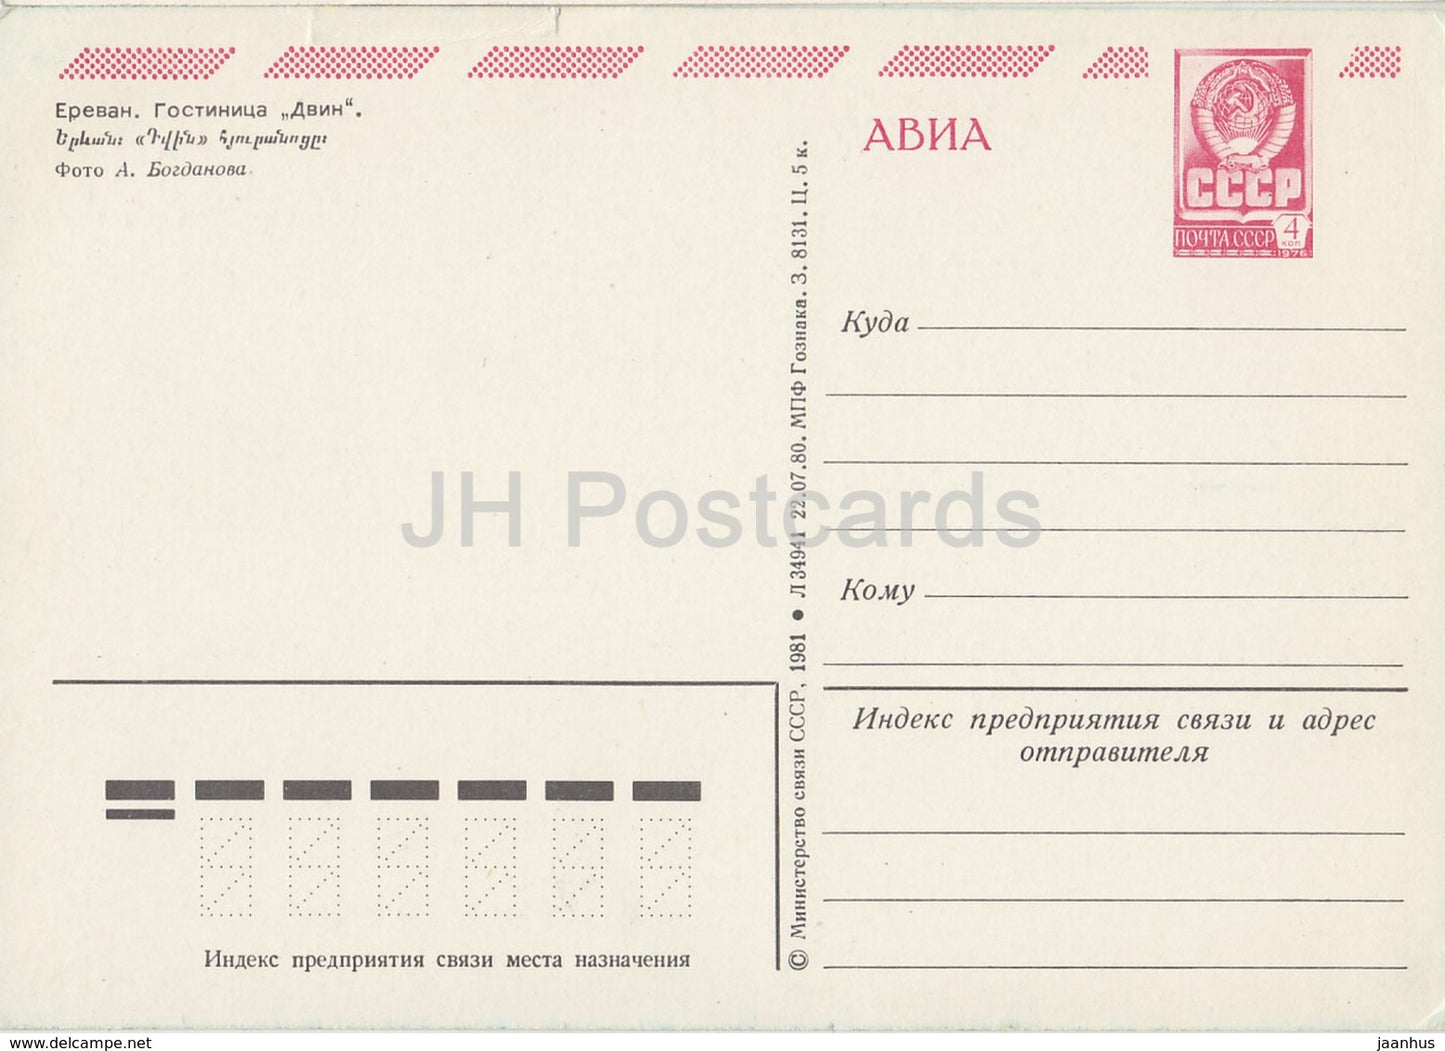 Erevan - hôtel Dvin - AVIA - entier postal - 1981 - Arménie URSS - inutilisé